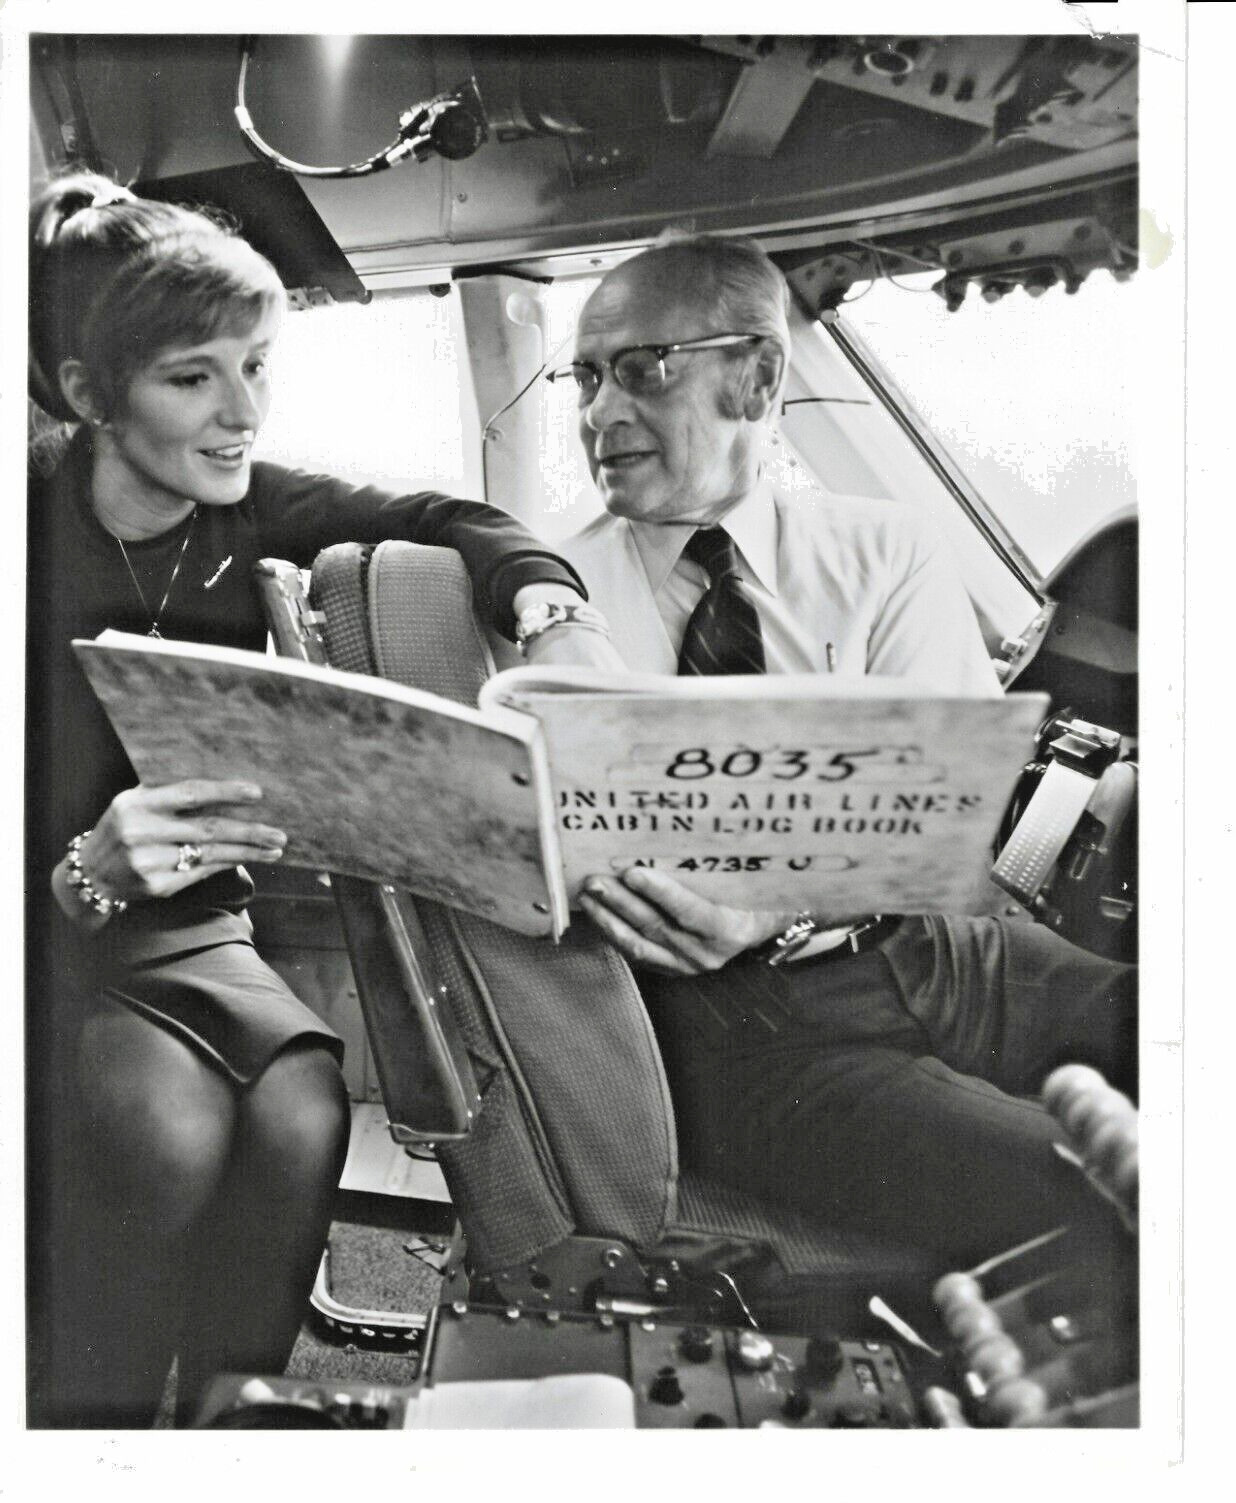 Vtg 1970s United Airlines Pilot & Cabin Log Book & Flight Attendant 8x10 Media